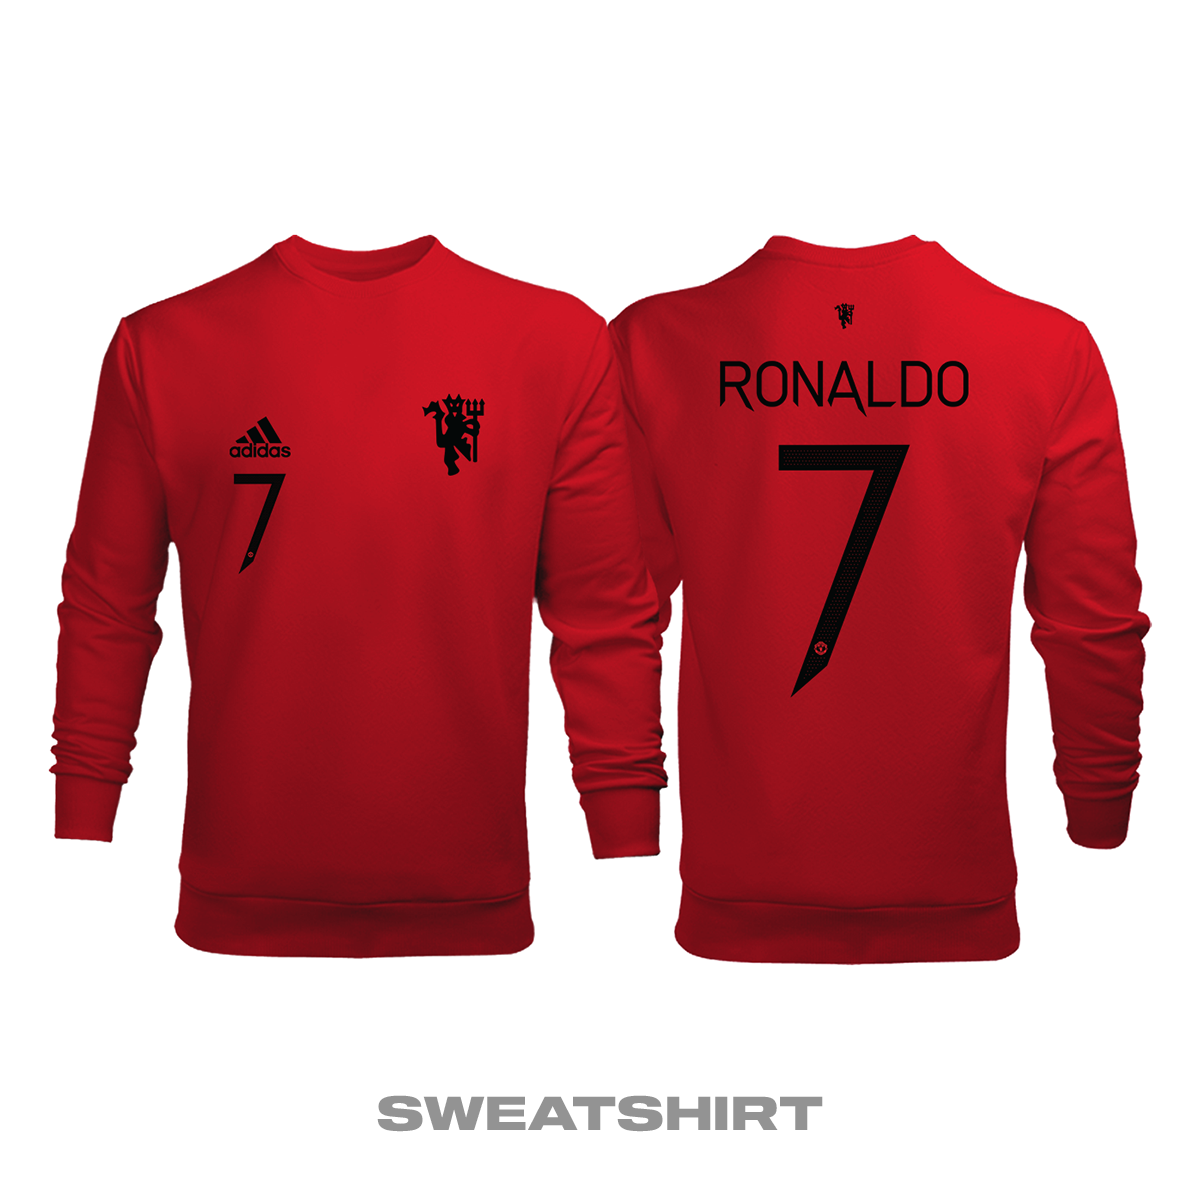 Manchester United: Red Devil Edition 2021/2022 Sweatshirt